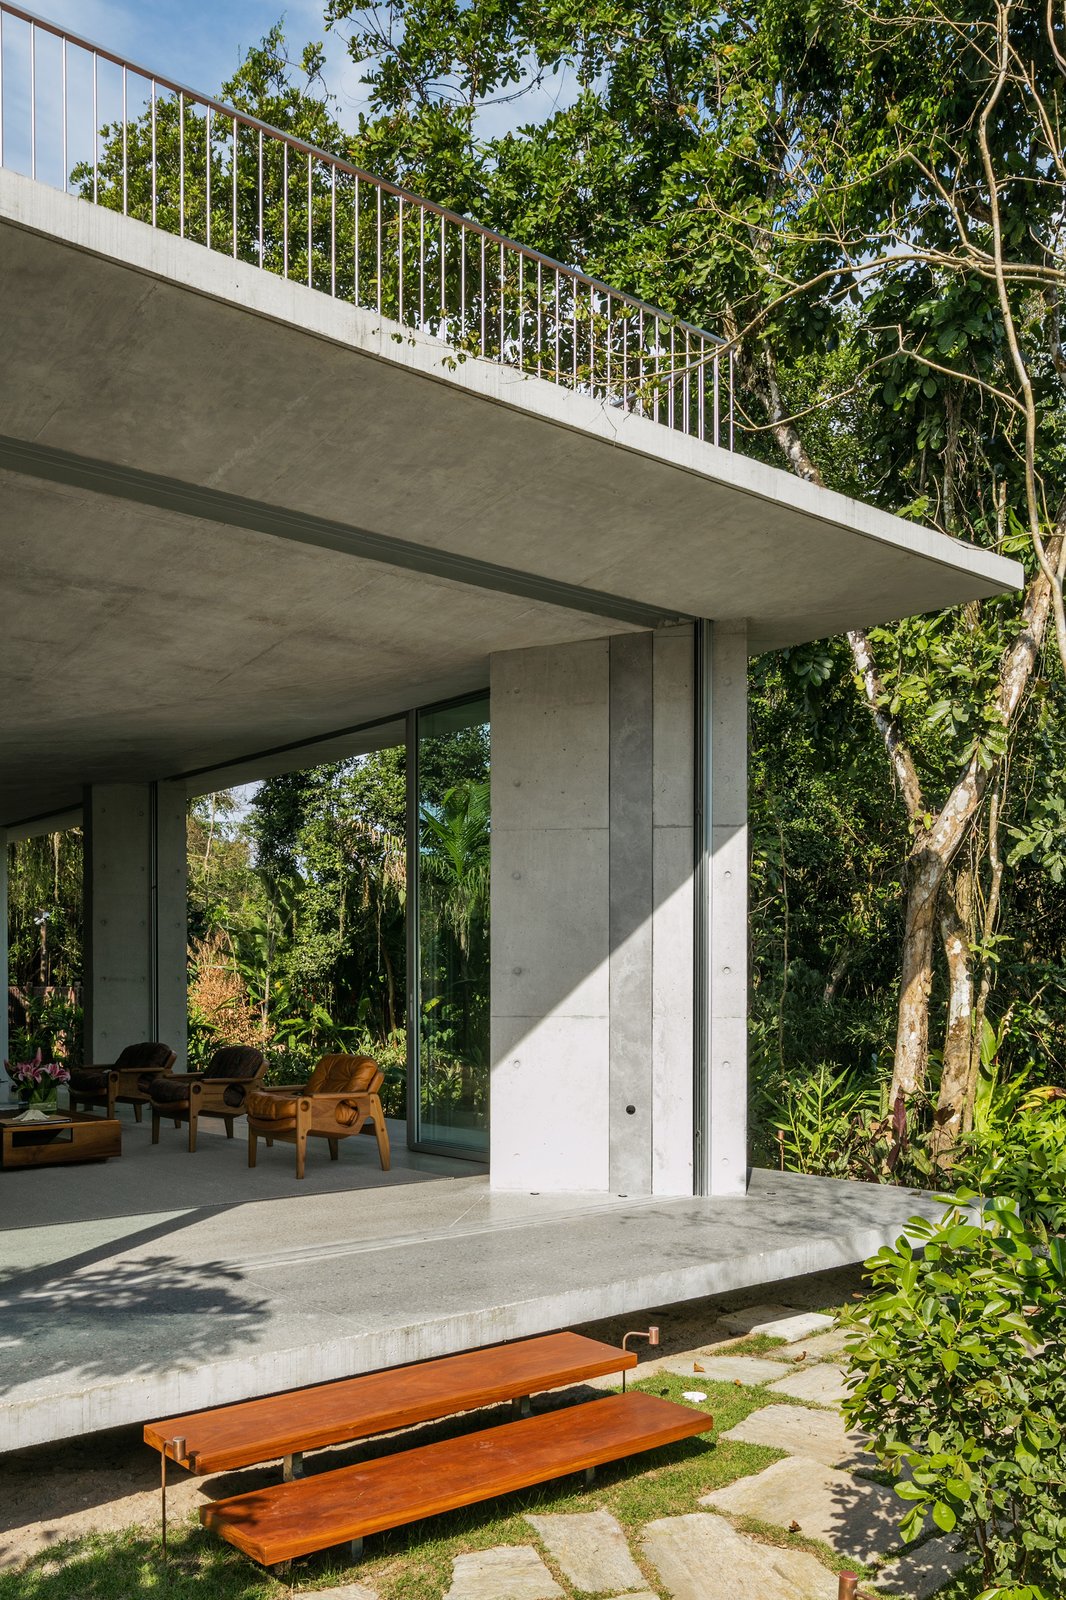 Residência Itamambuca - contemporary house in the jungle - exterior